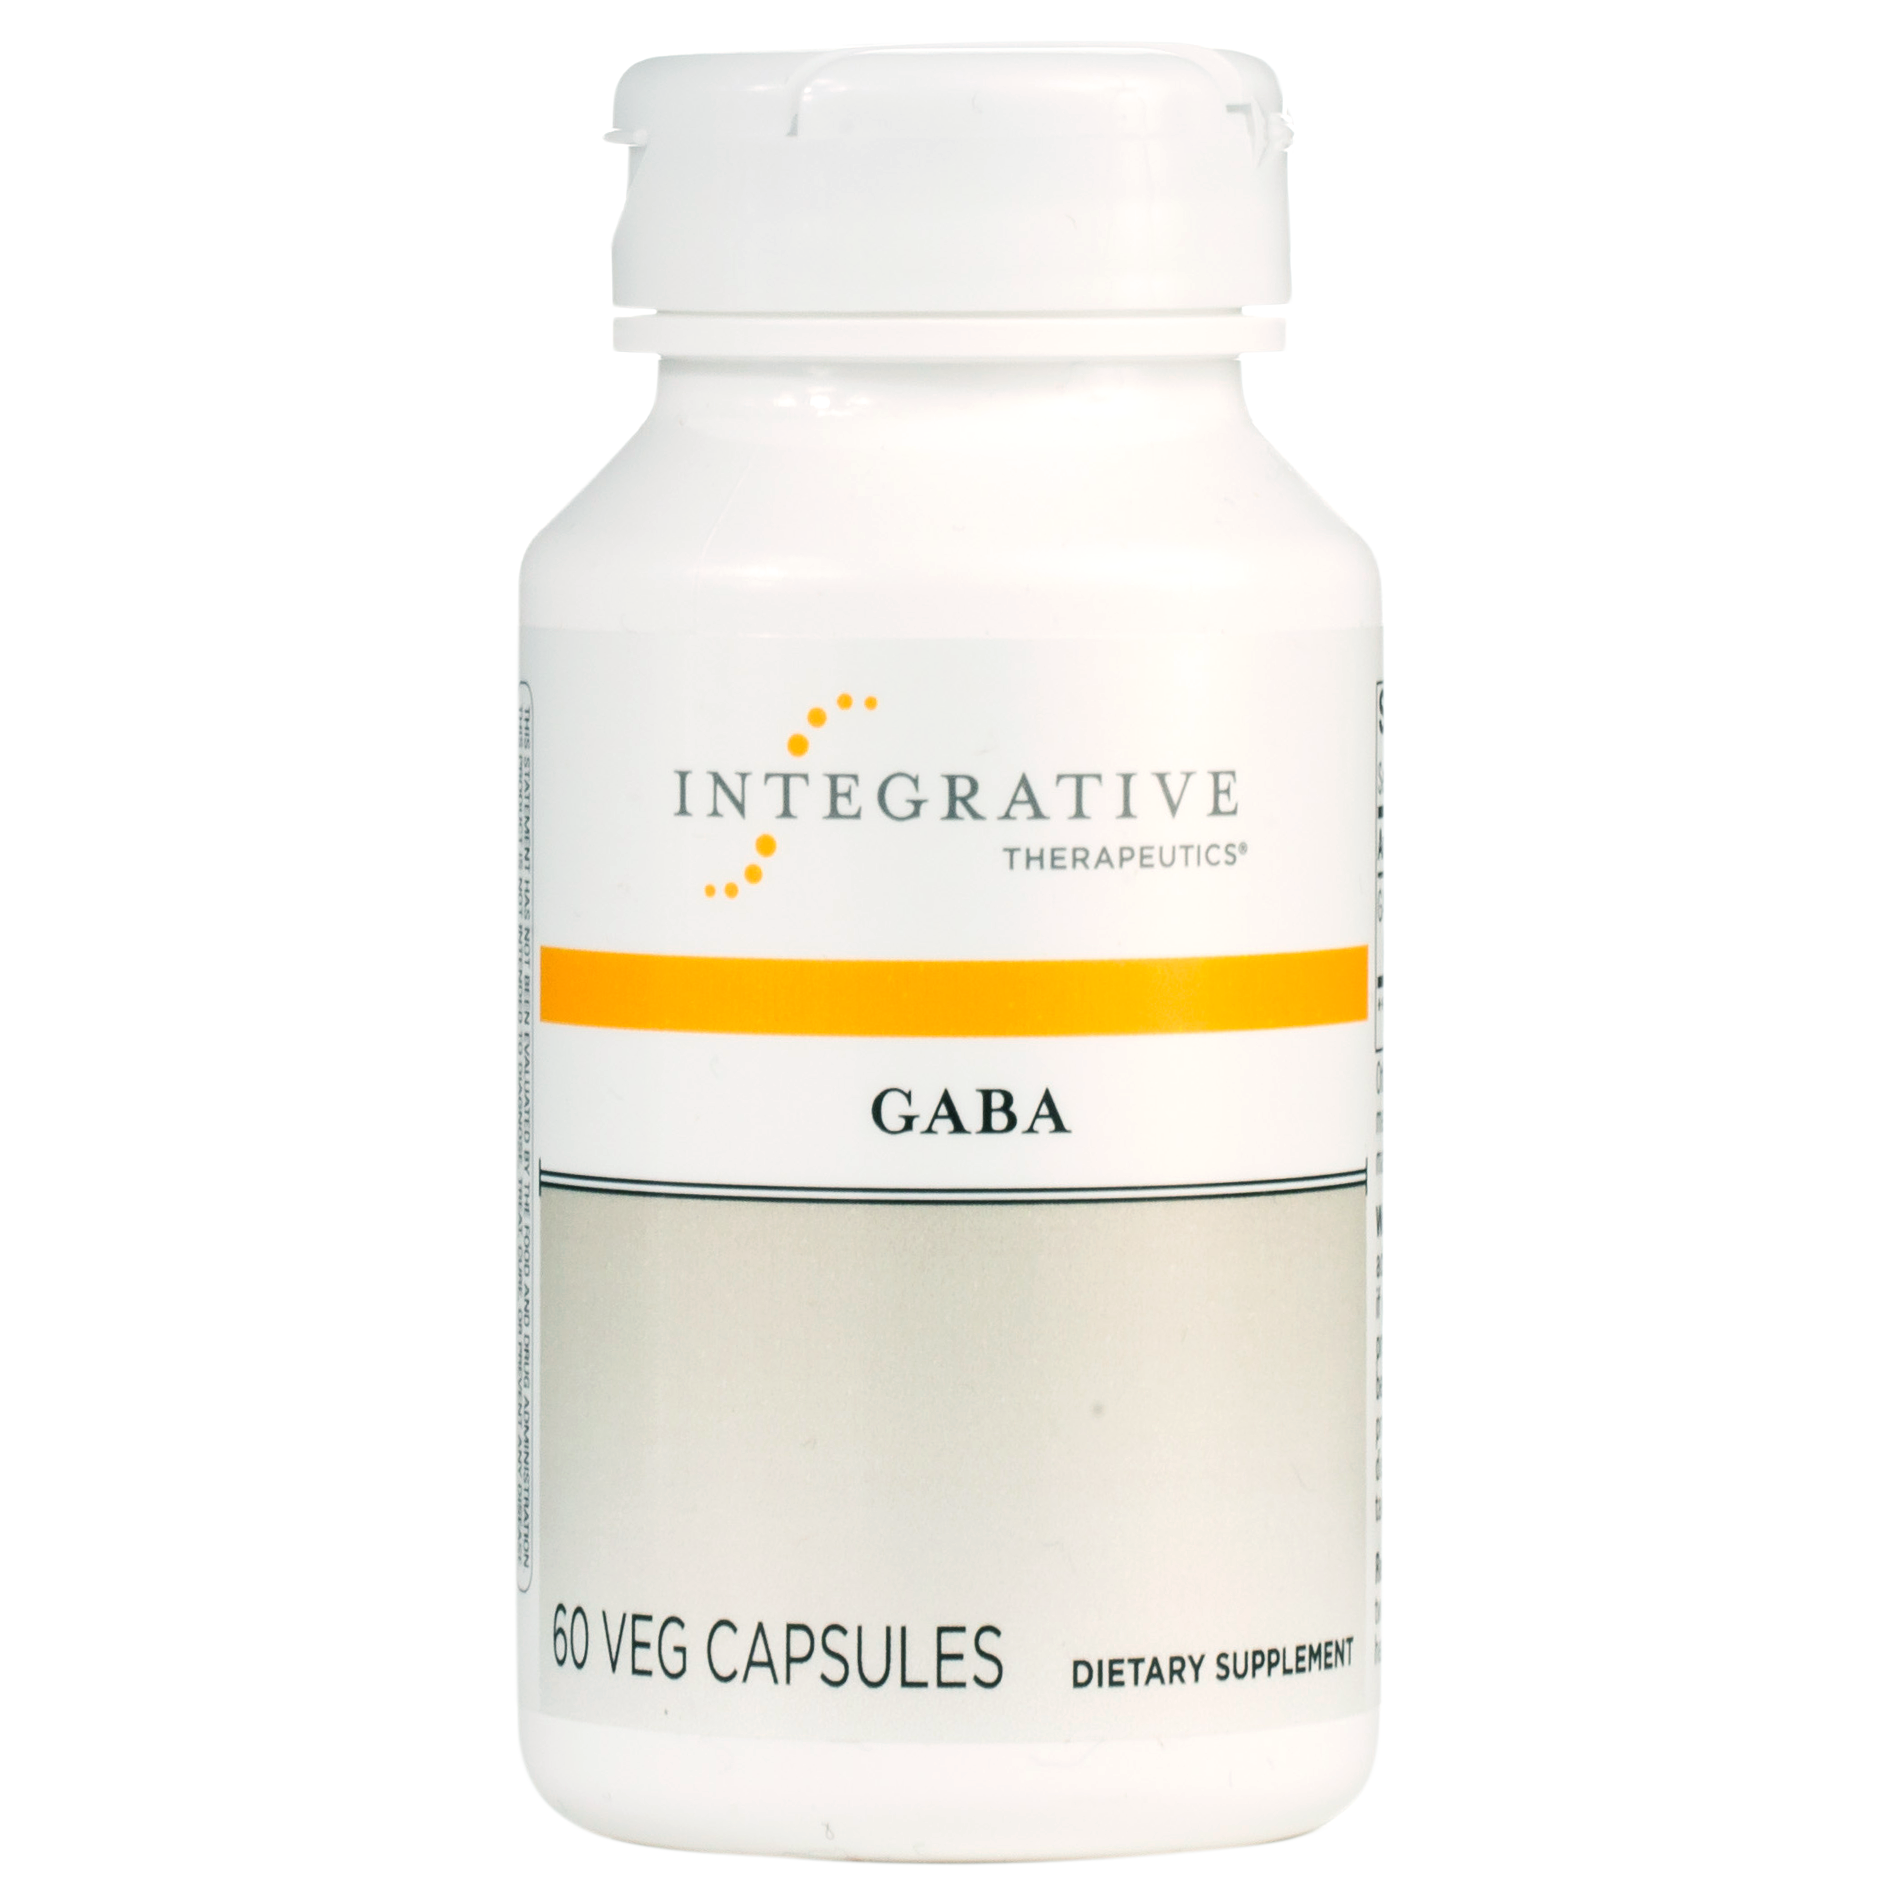 Integrative Therapeutics - GABA supplement white bottle